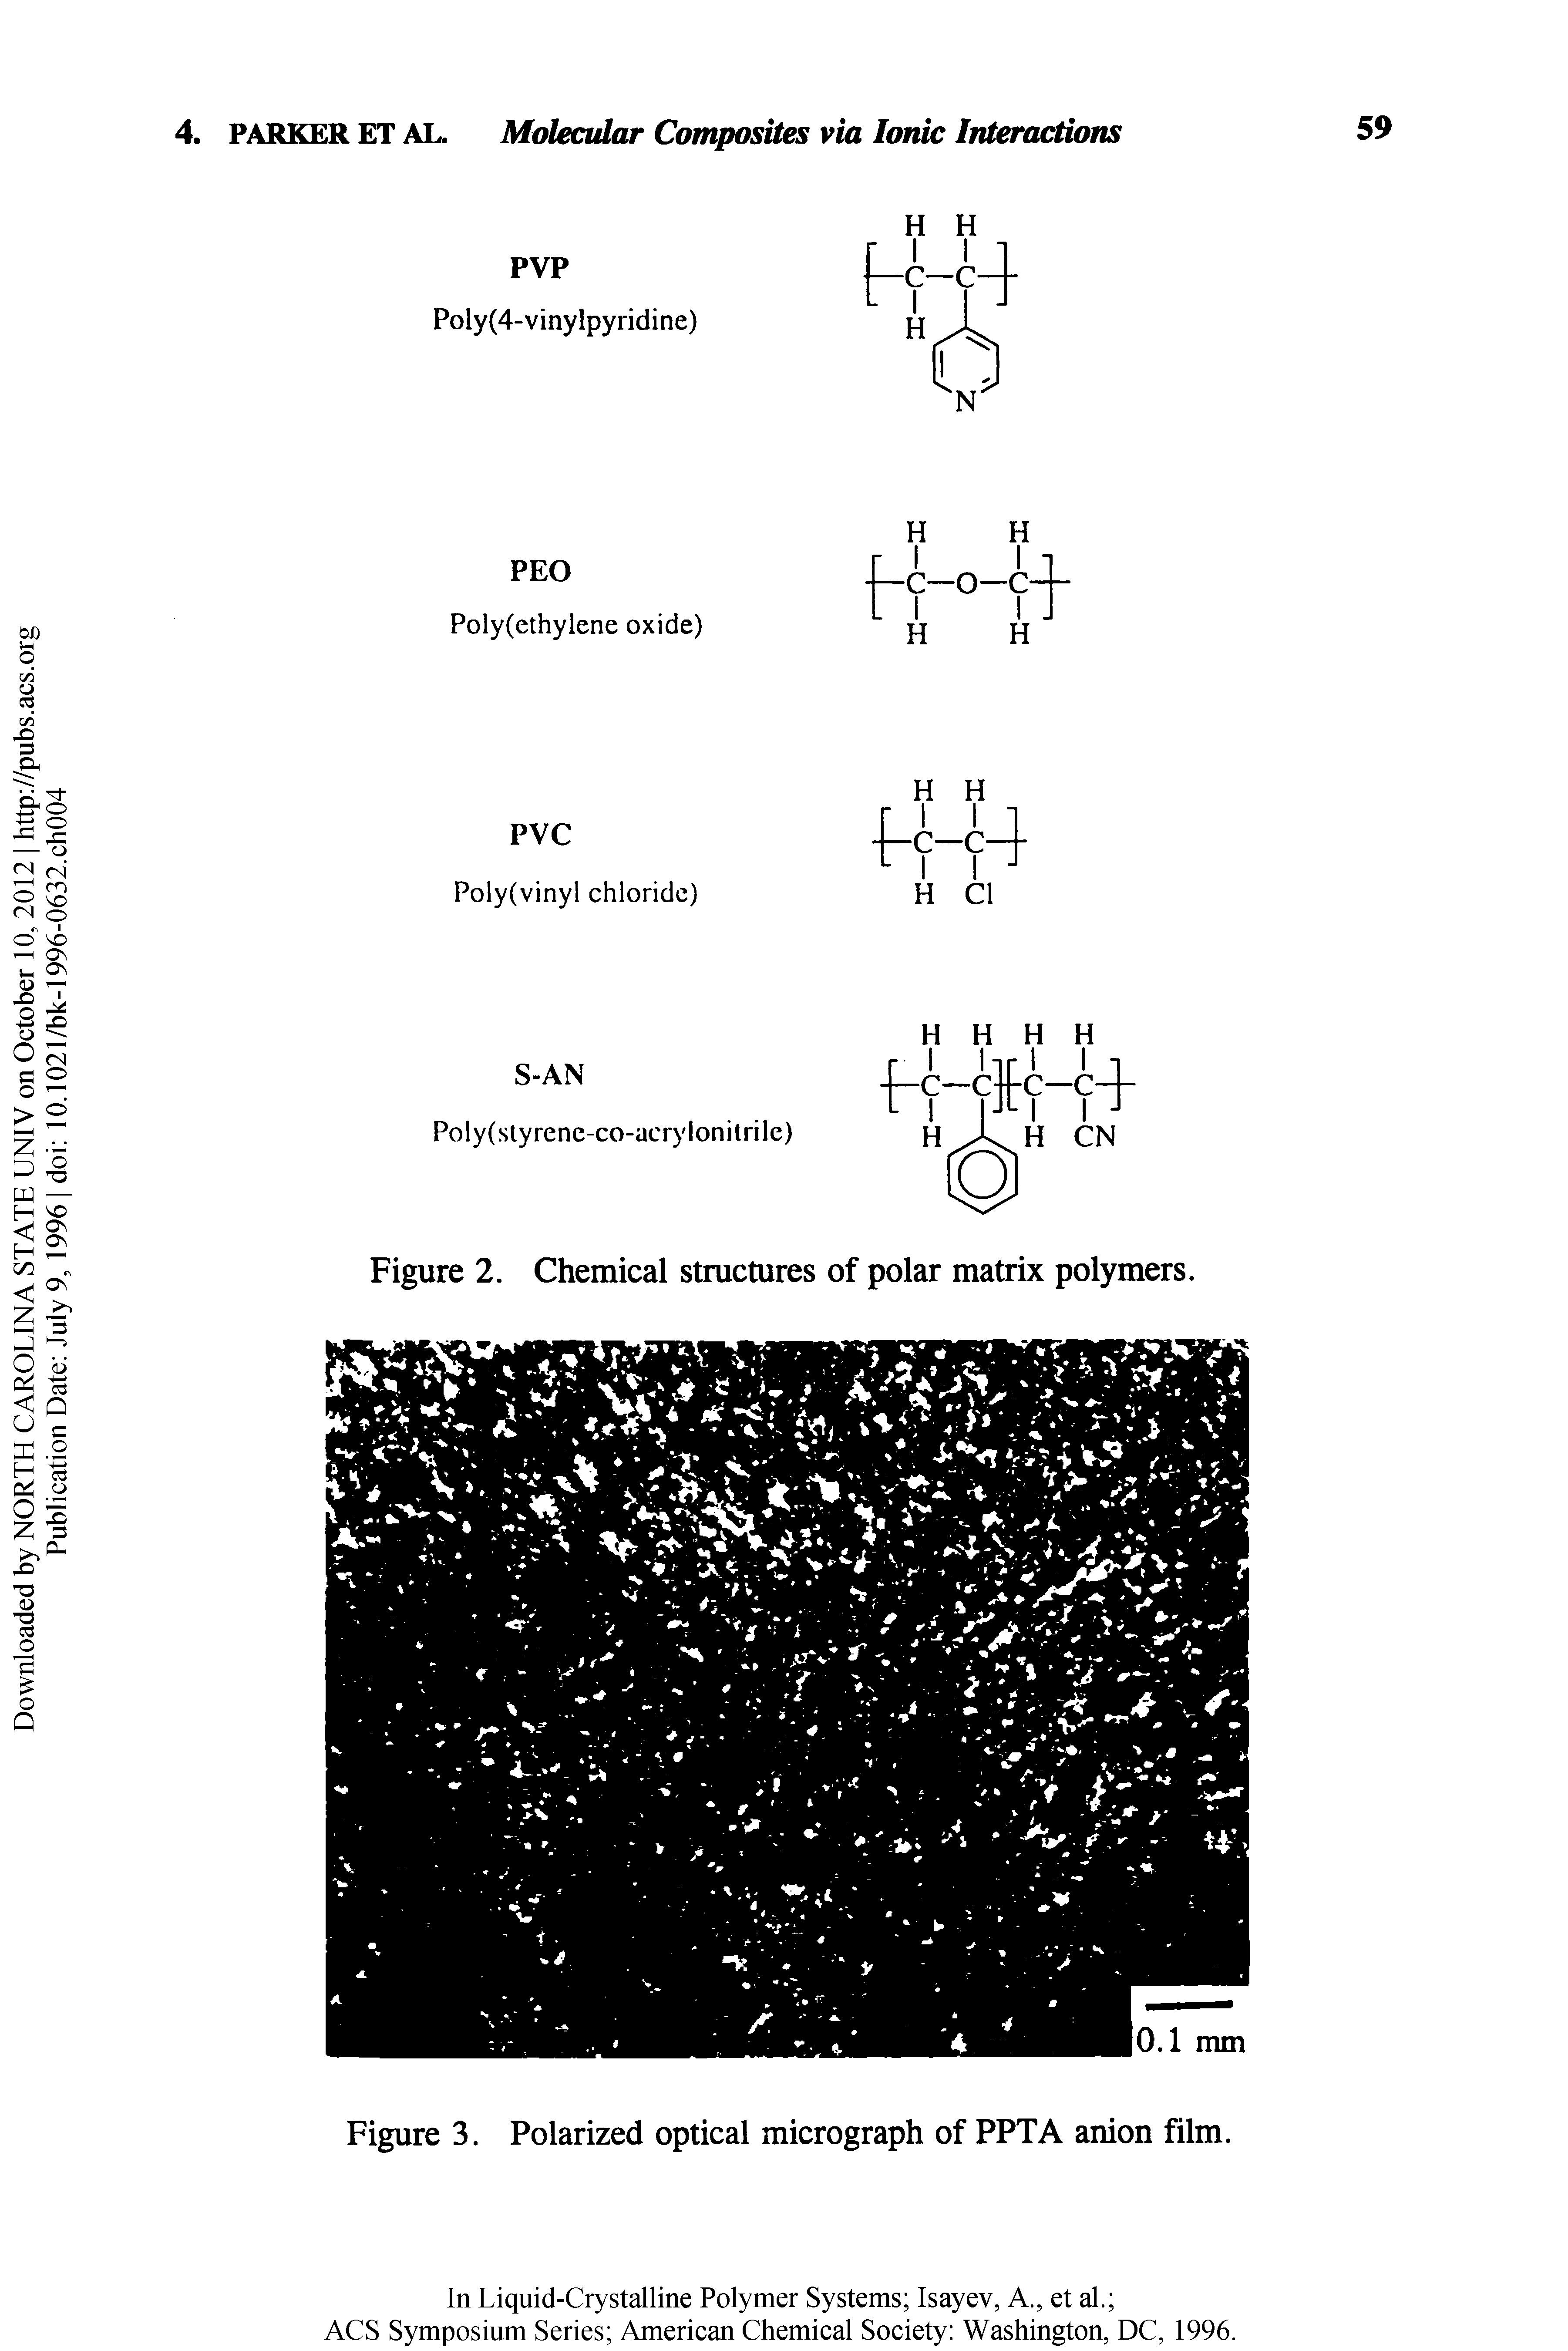 Figure 3. Polarized optical micrograph of PPTA anion film.